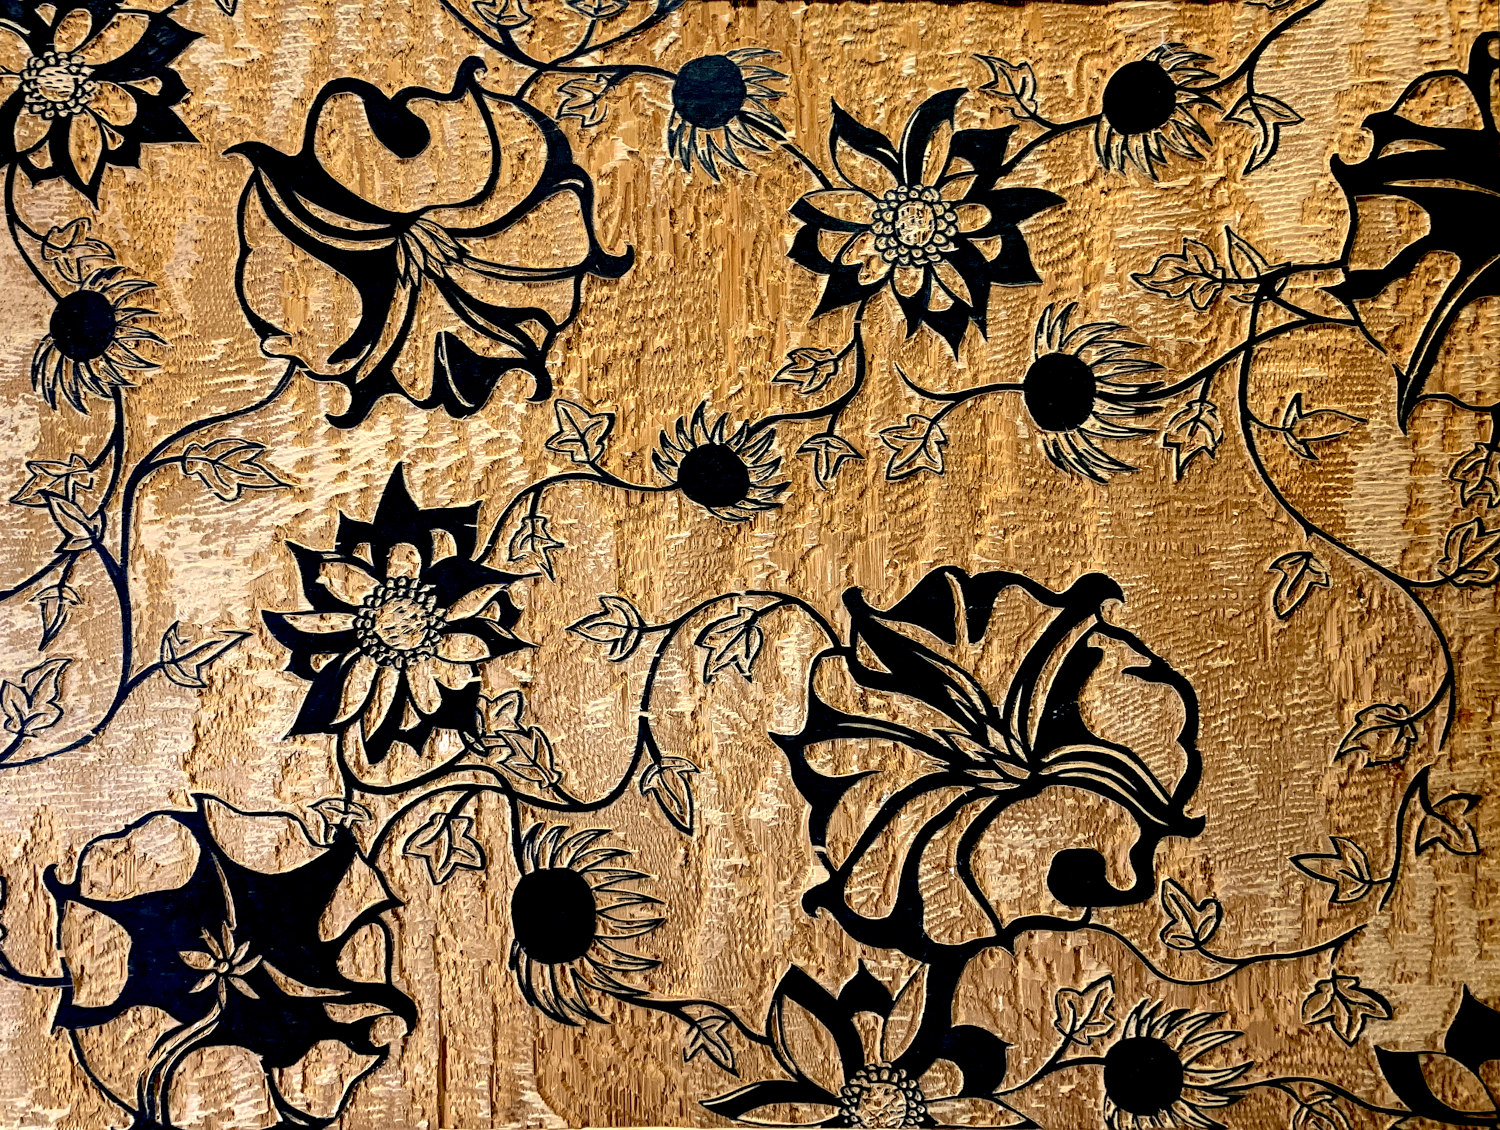 Wooden Flowers woodcut, by Tara Marolf